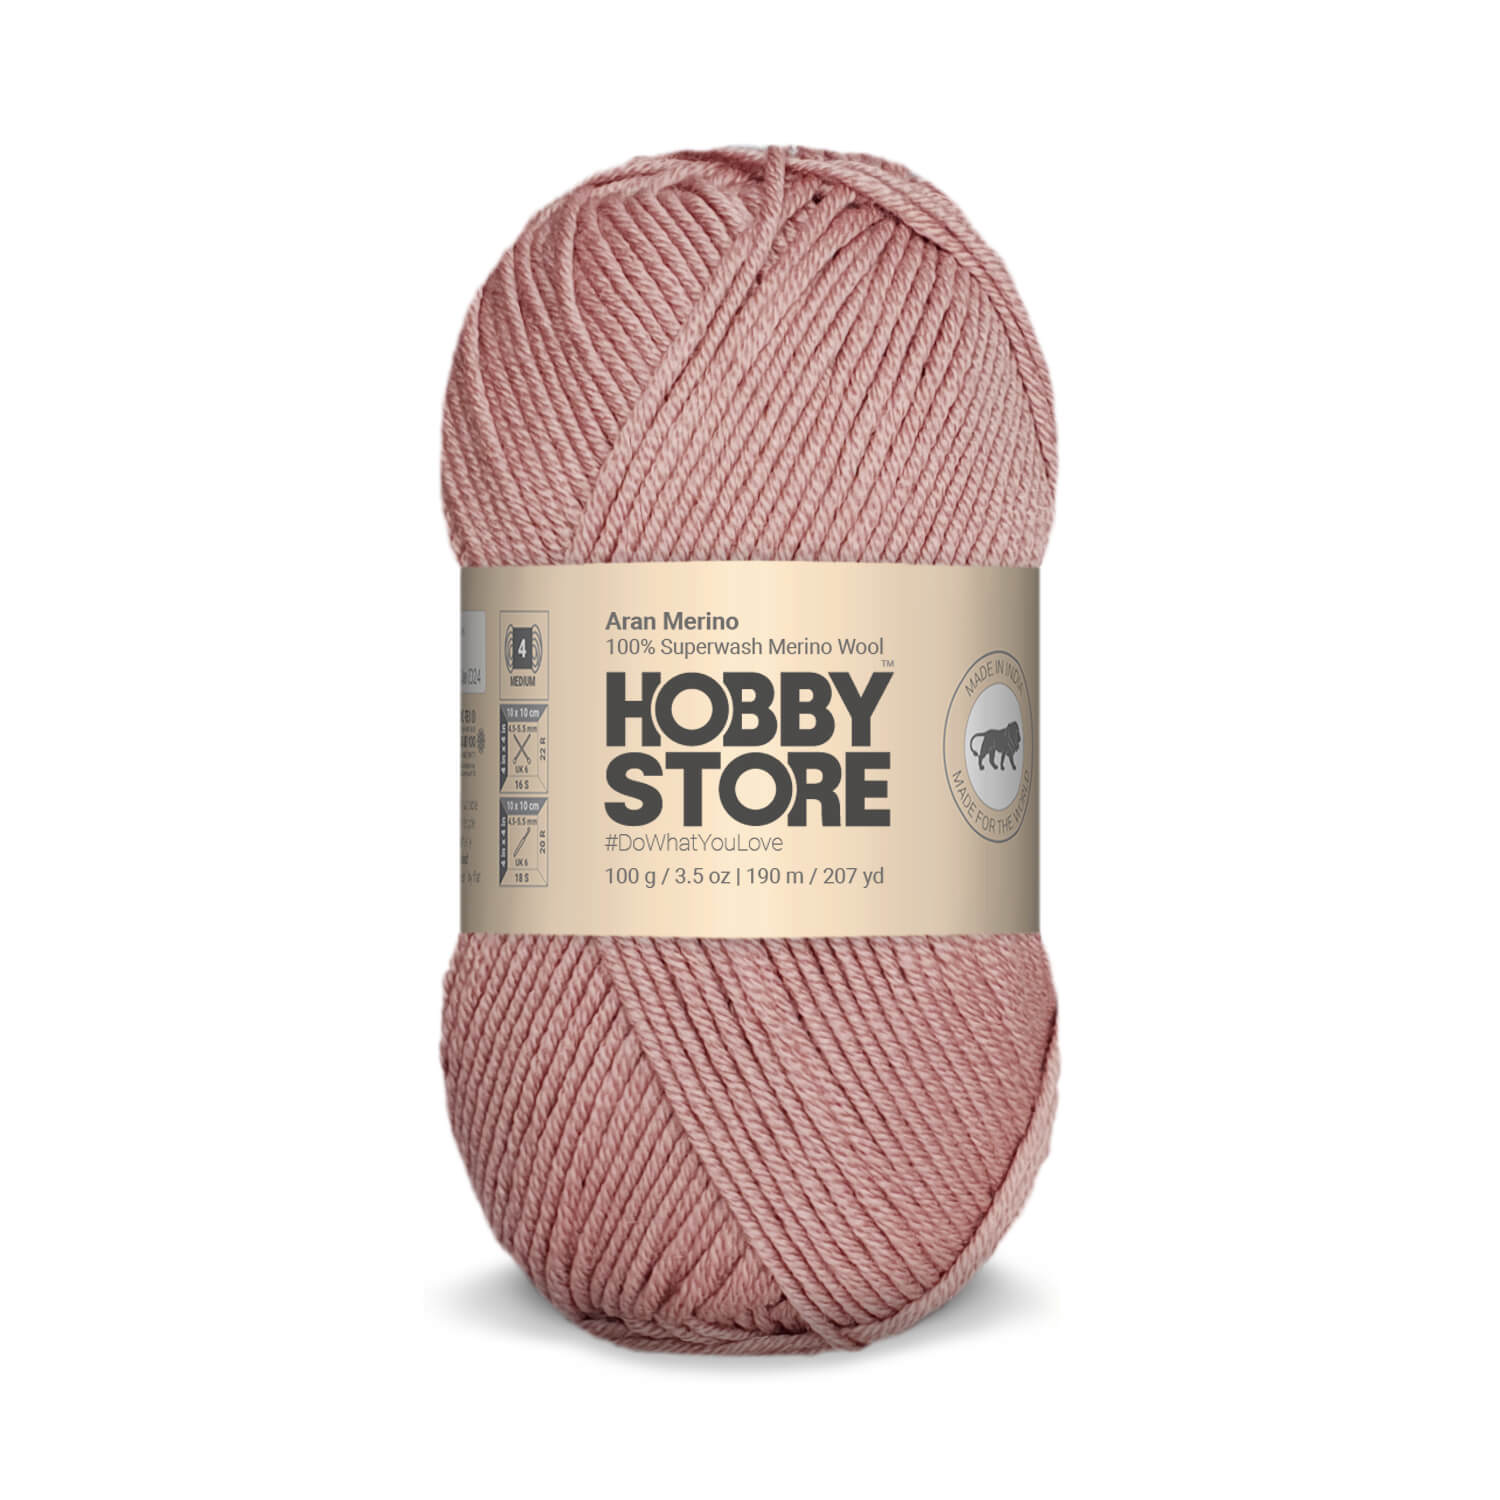 Aran Merino Wool by Hobby Store - Dried Rose AM030